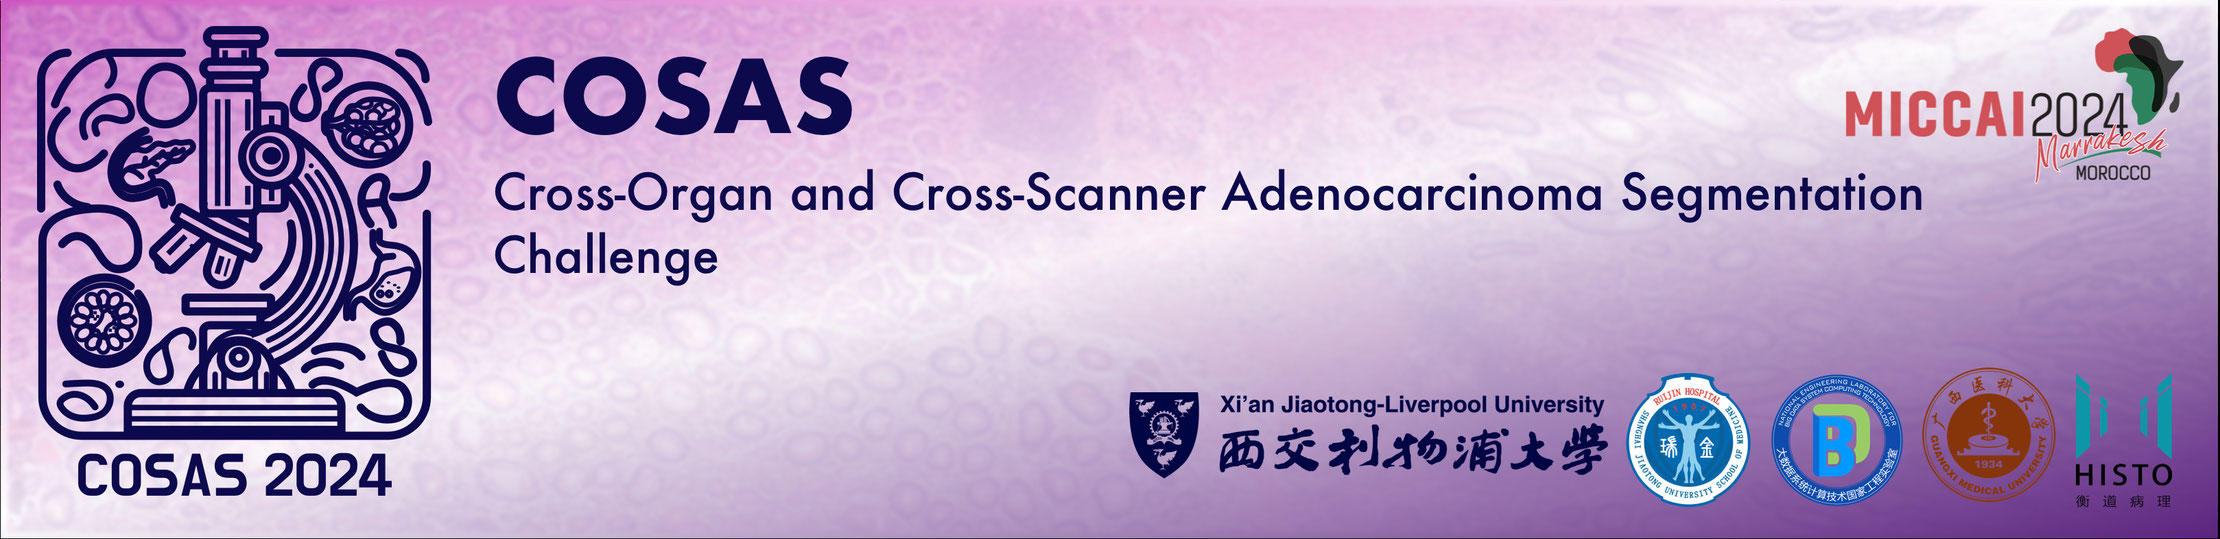 Cross-Organ and Cross-Scanner Adenocarcinoma Segmentation Banner